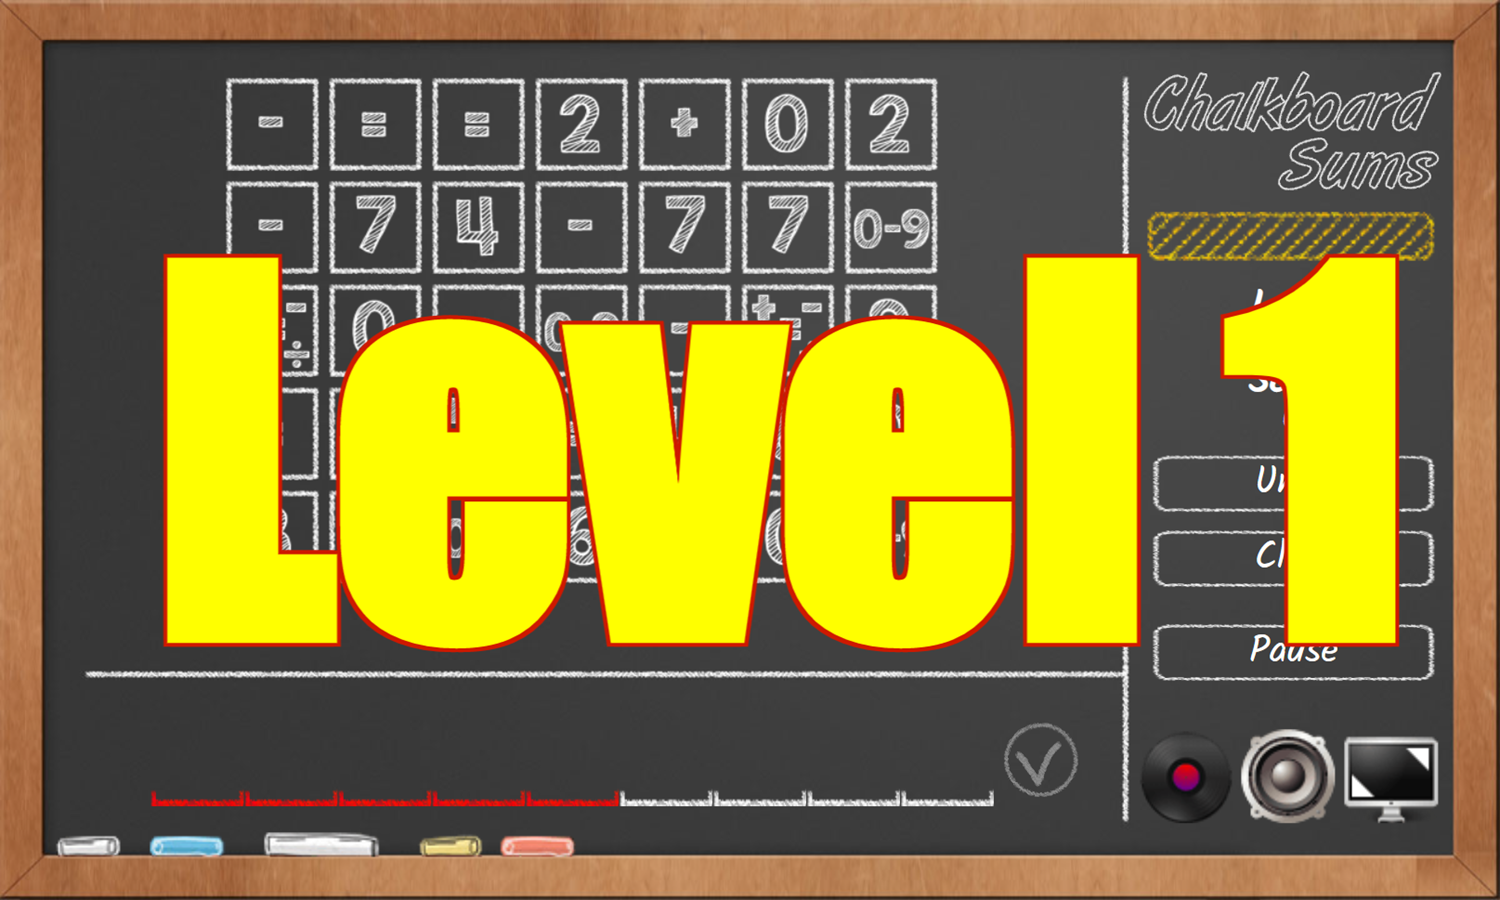 Chalkboard Sums Game Level 1 Screenshot.